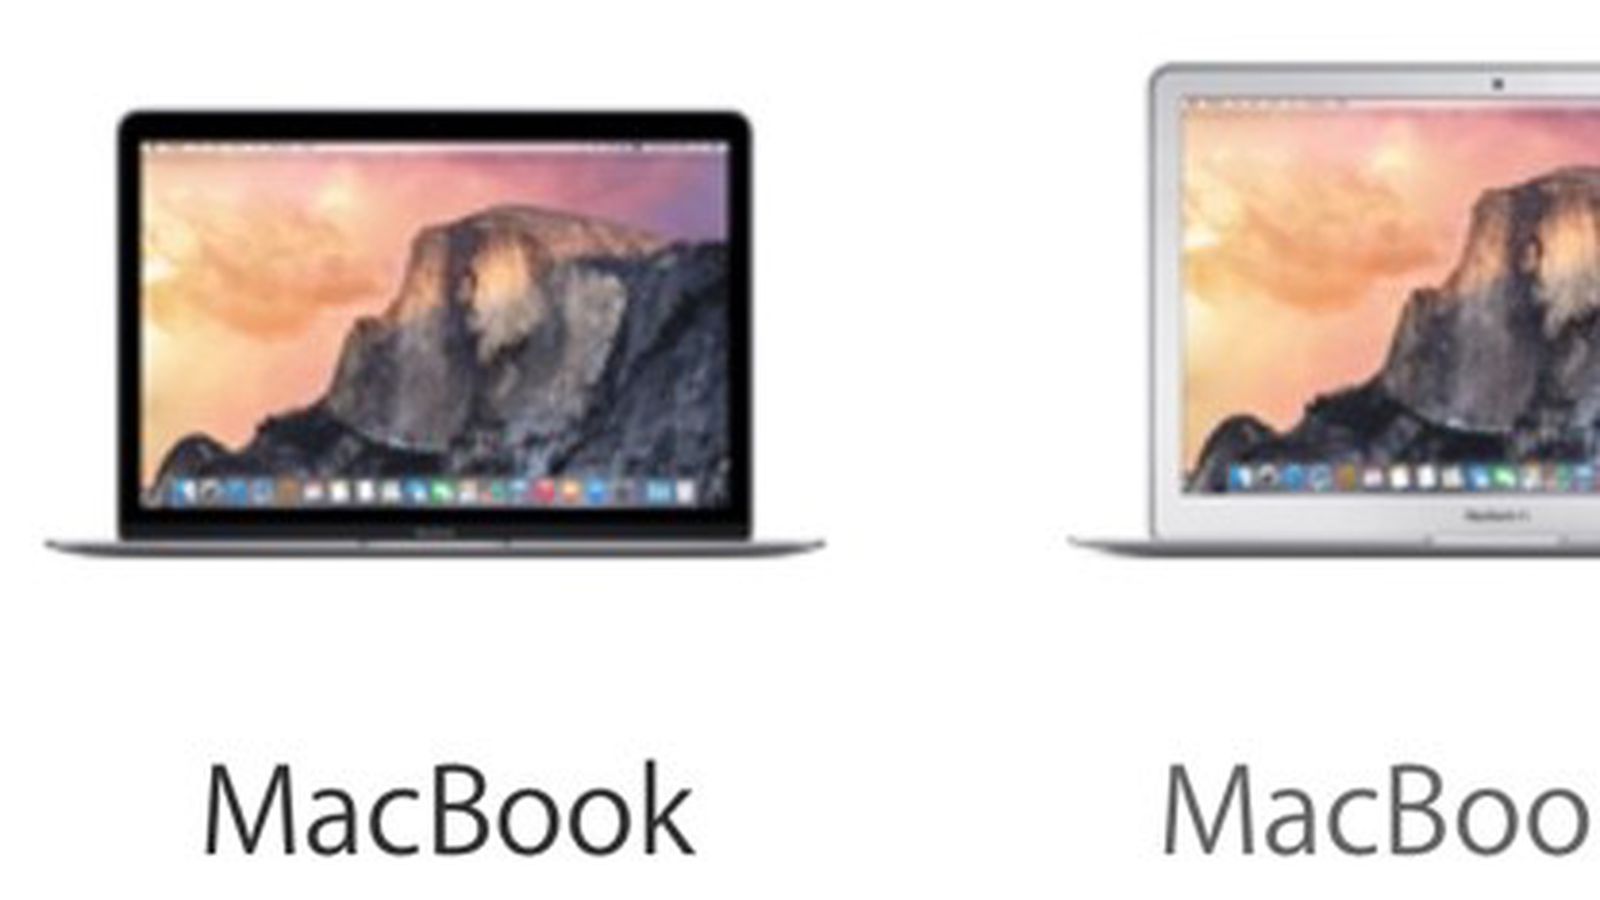 Force Shutdown On Macbook Pro